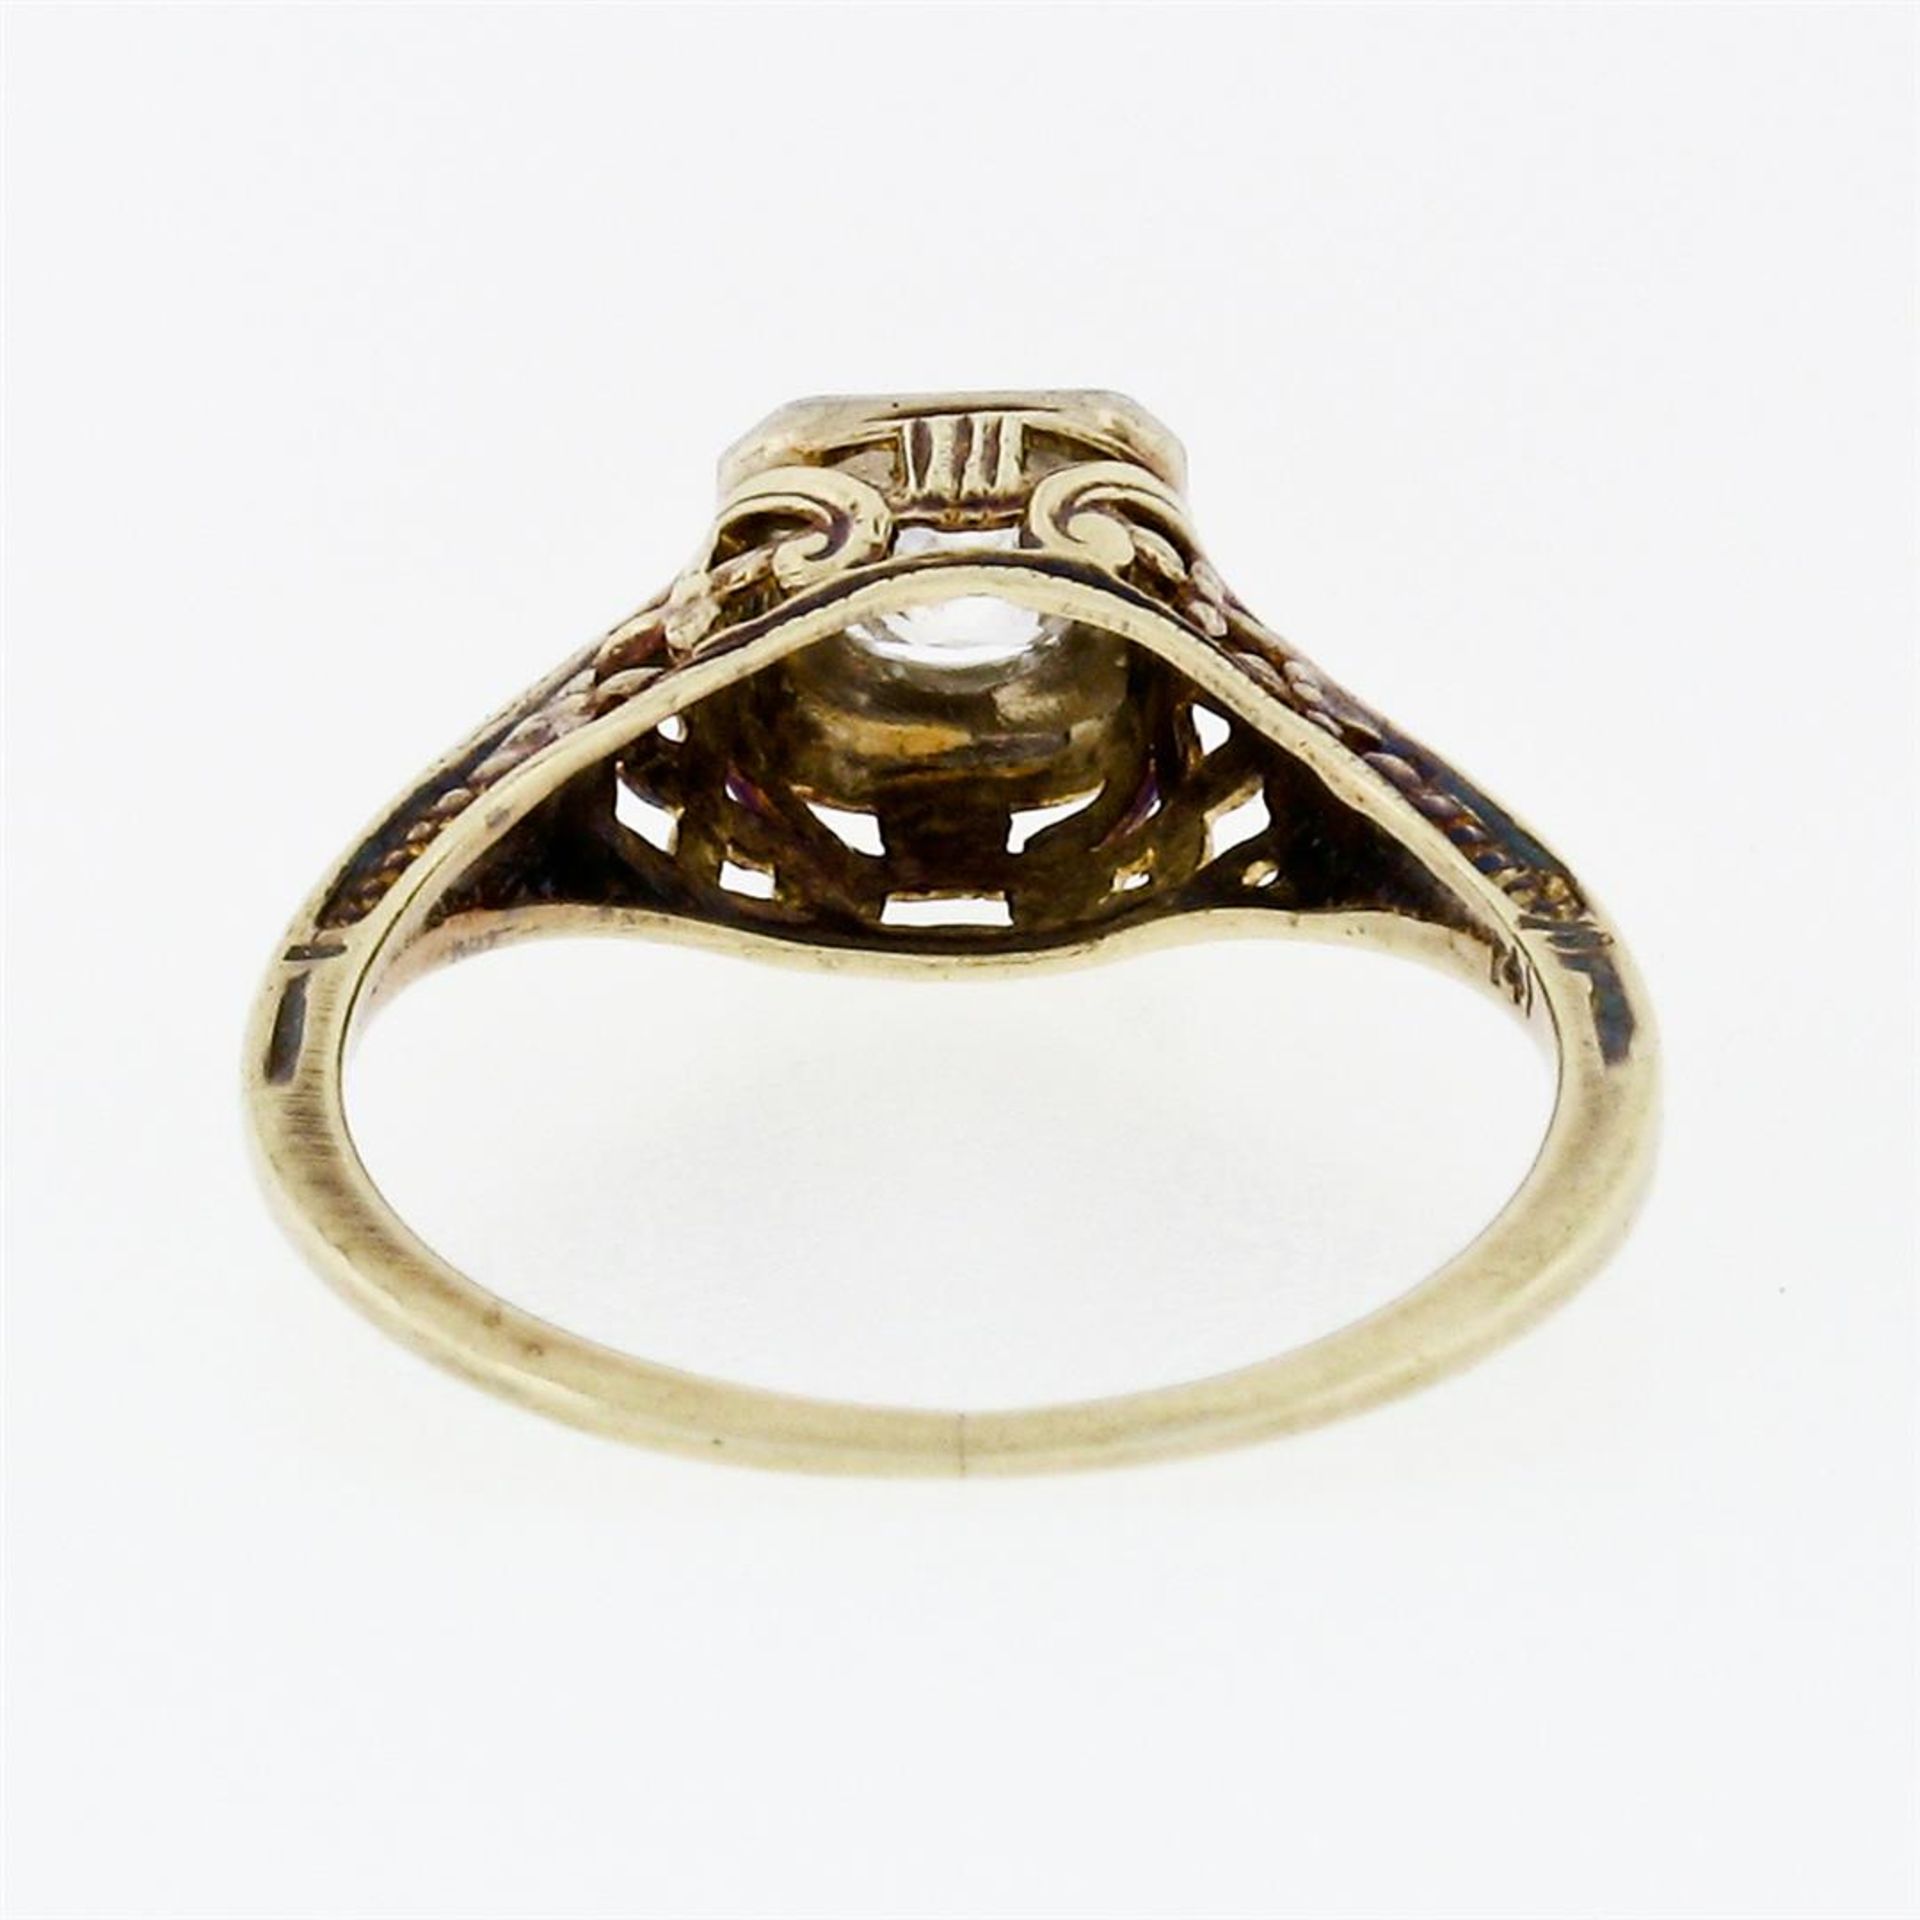 Antique Edwardian 14K TT Gold 0.15 ctw Old Mine Diamond Filigree Engagement Ring - Image 7 of 7